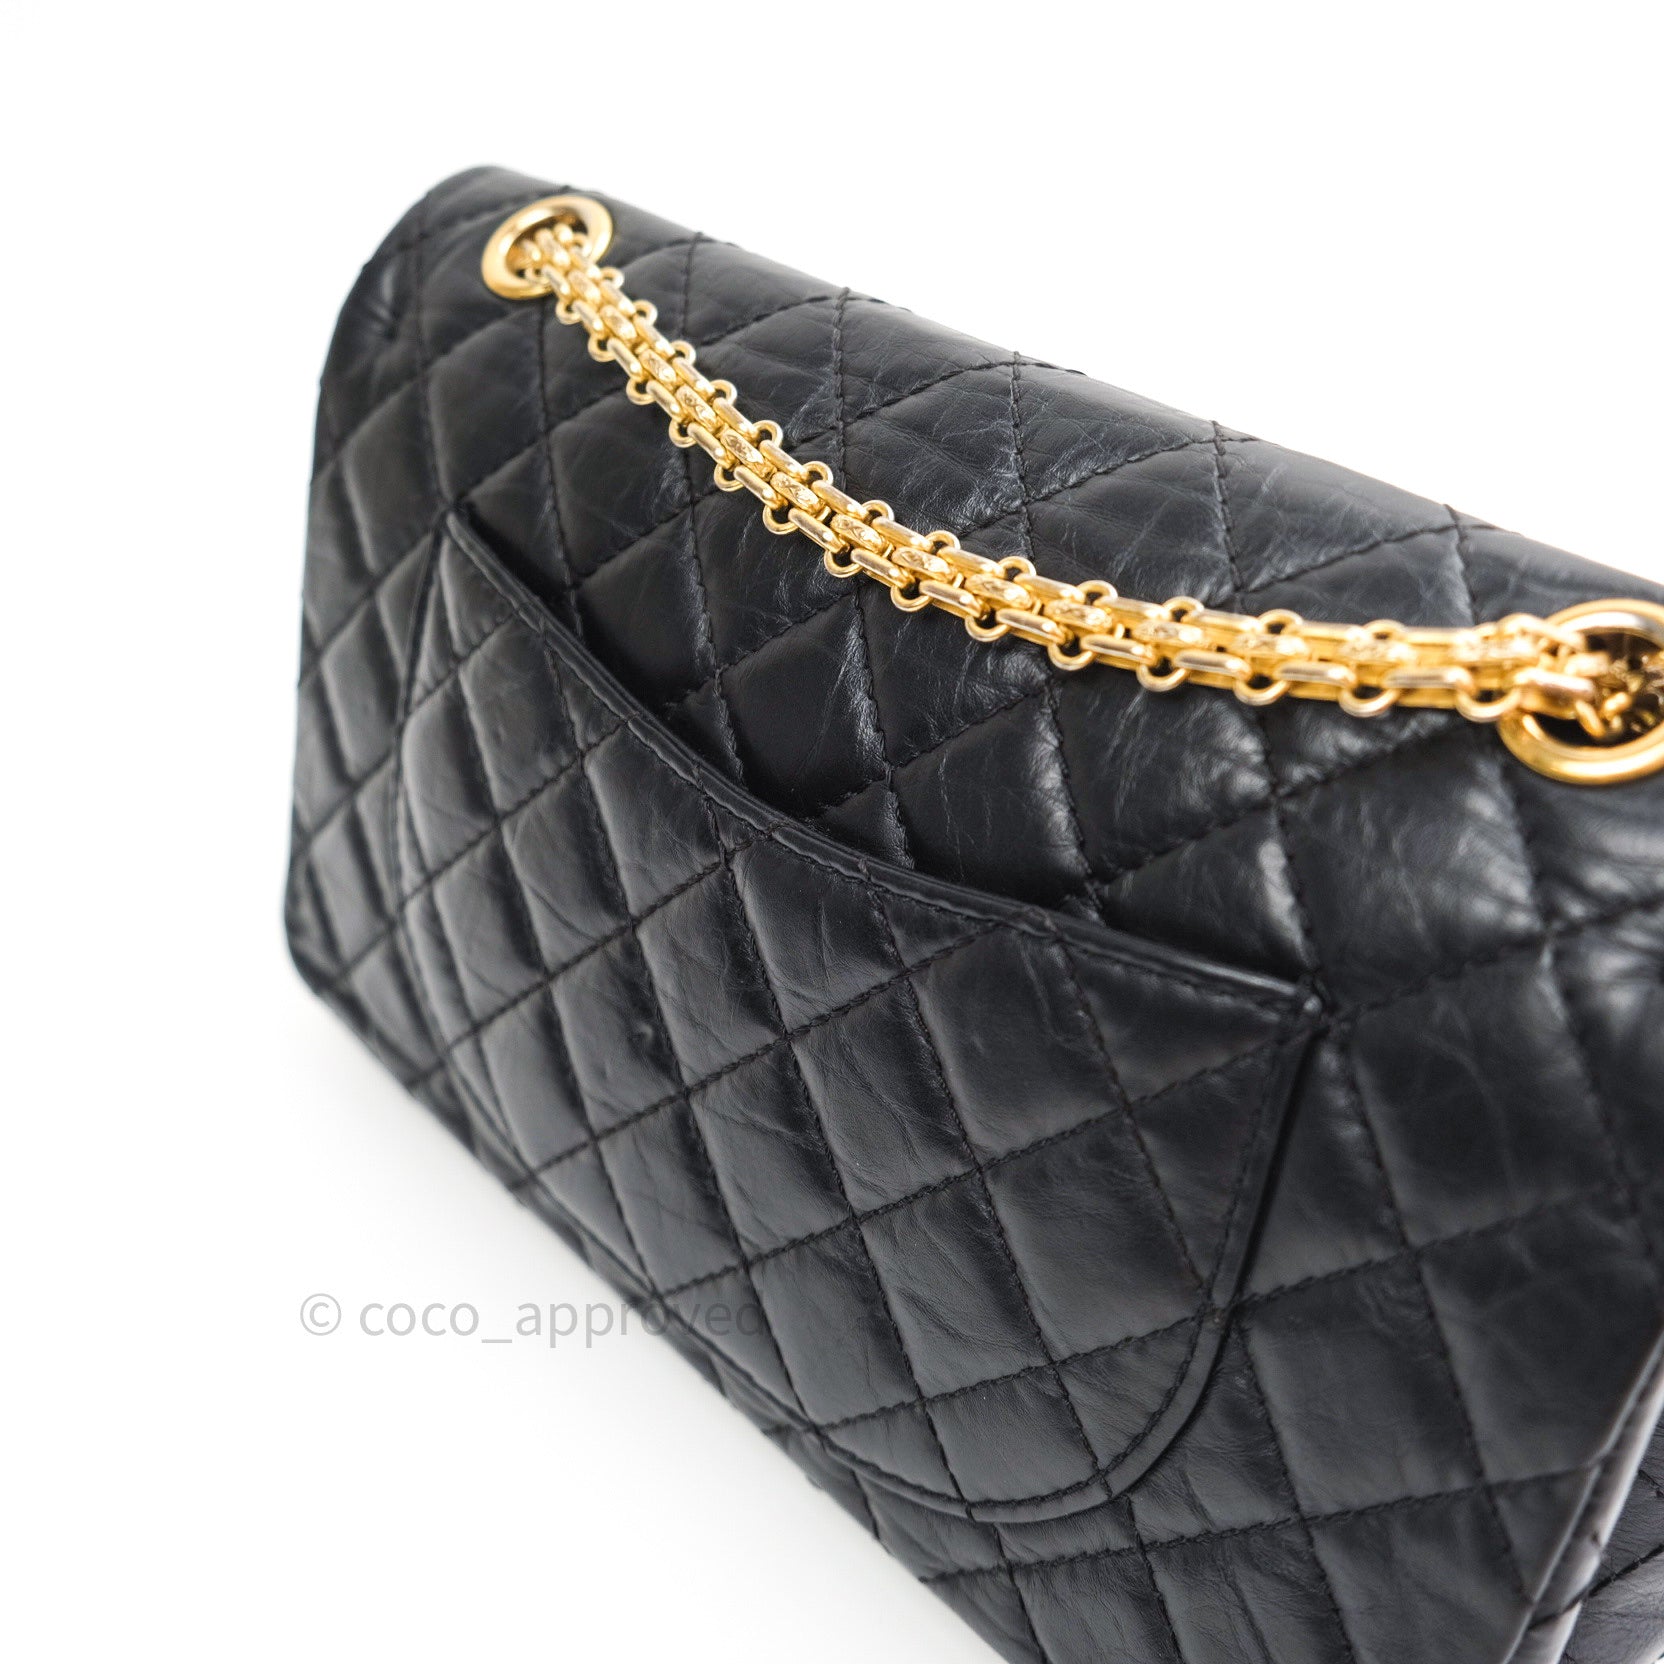 2.55 Long flap wallet - Aged calfskin & gold-tone metal, black